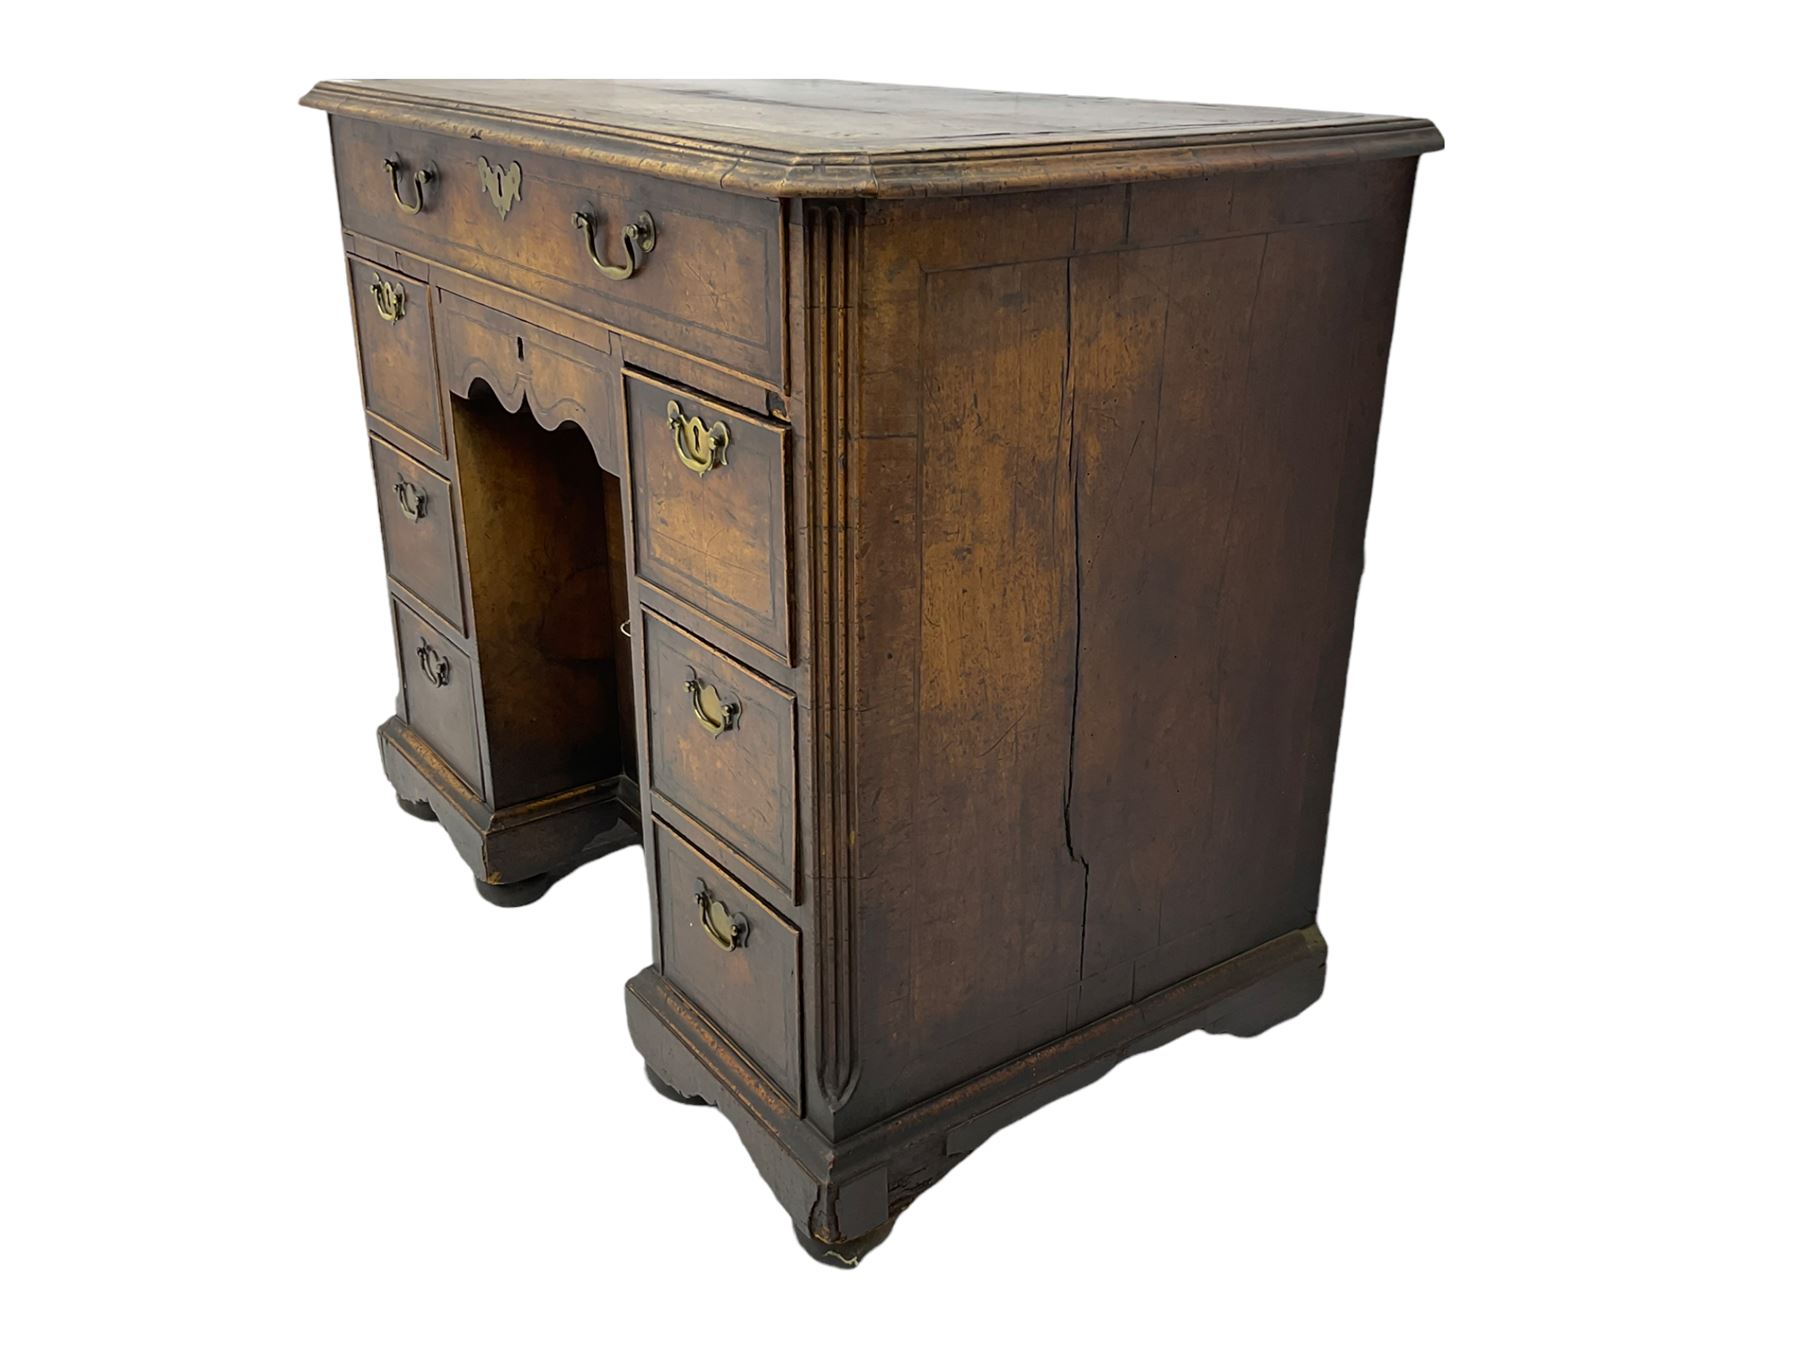 George III mahogany desk - Image 2 of 10